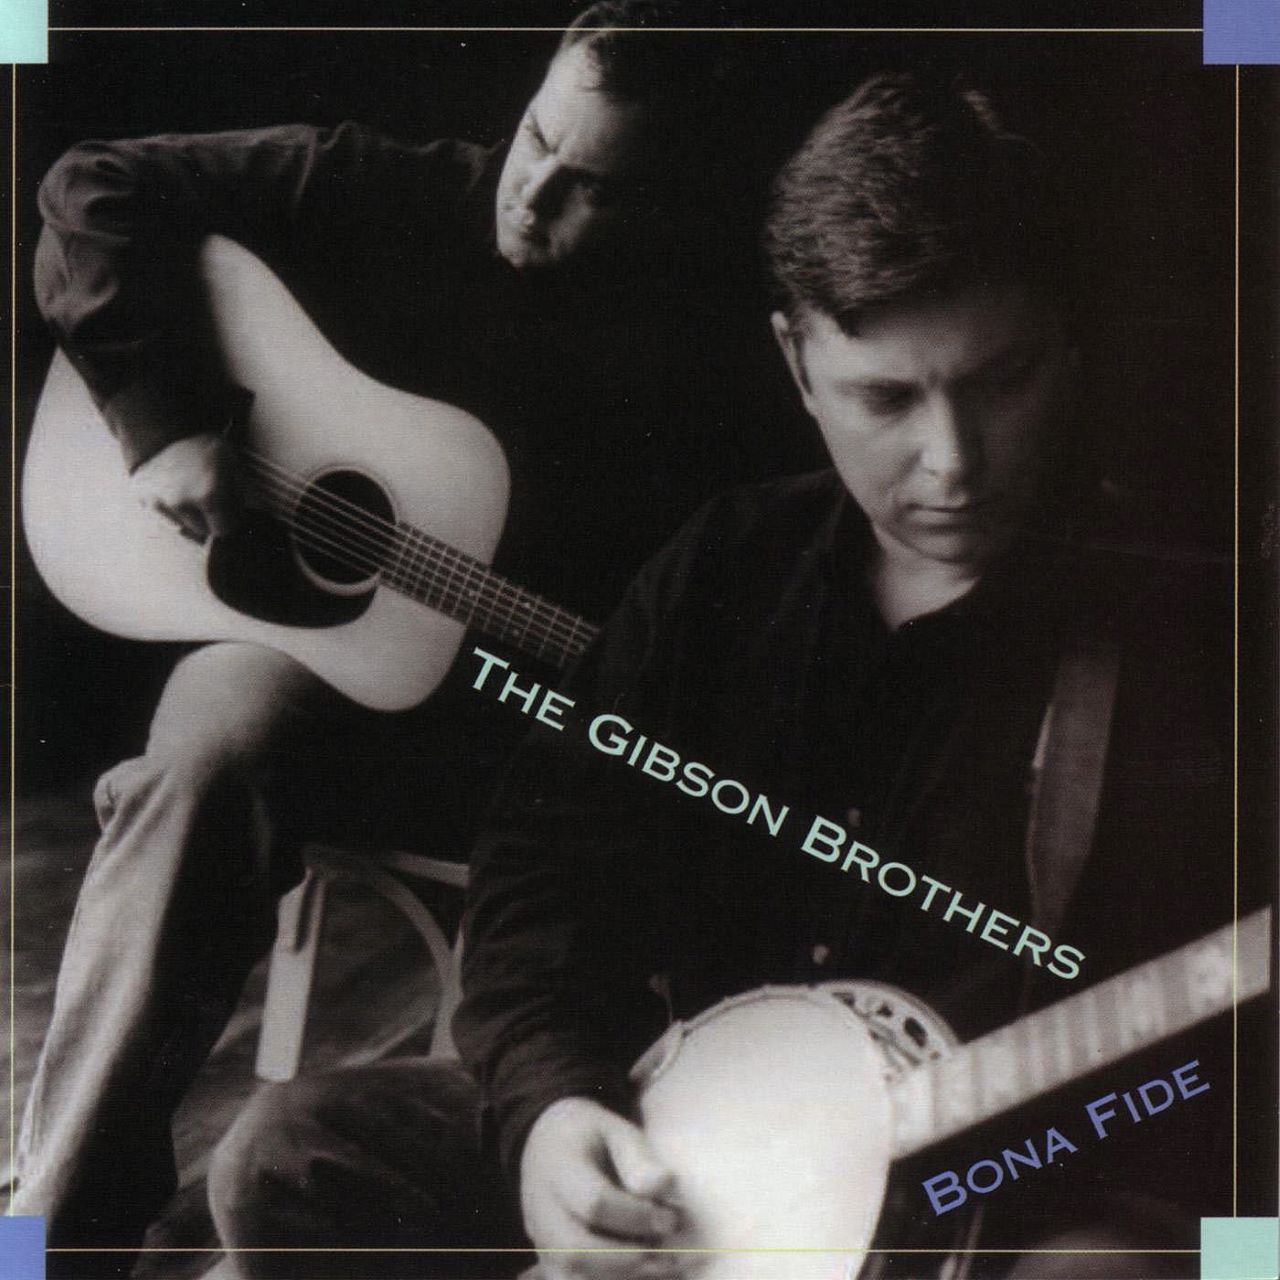 Gibson Brothers - Bona Fide cover album